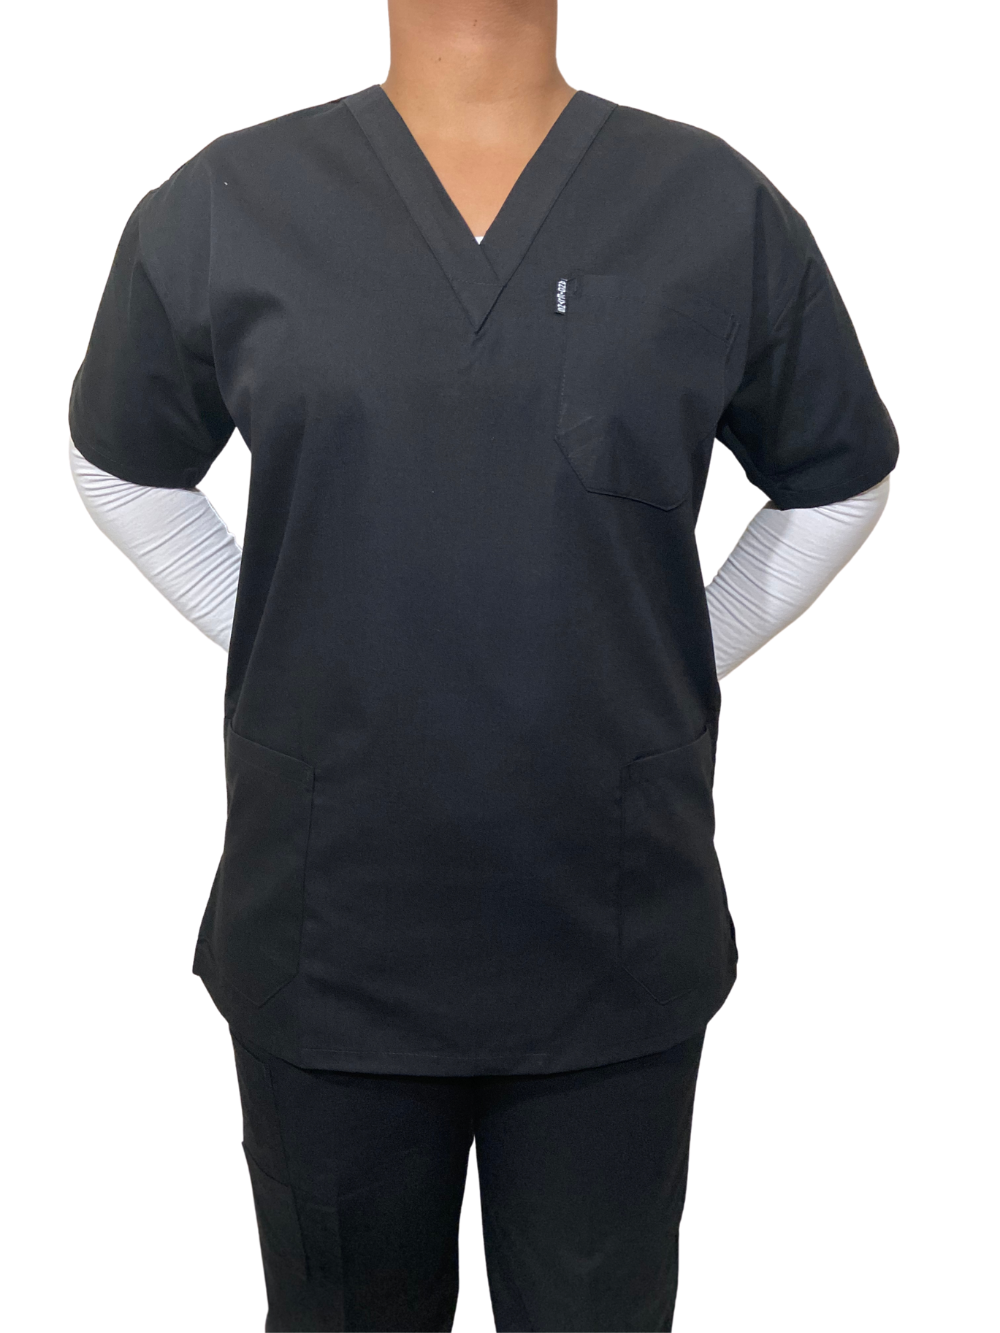 Black Scrubs – Medical Scrub Set (Top & Pant) – Angielyns Collections –  Medical Scrubs, Uniforms